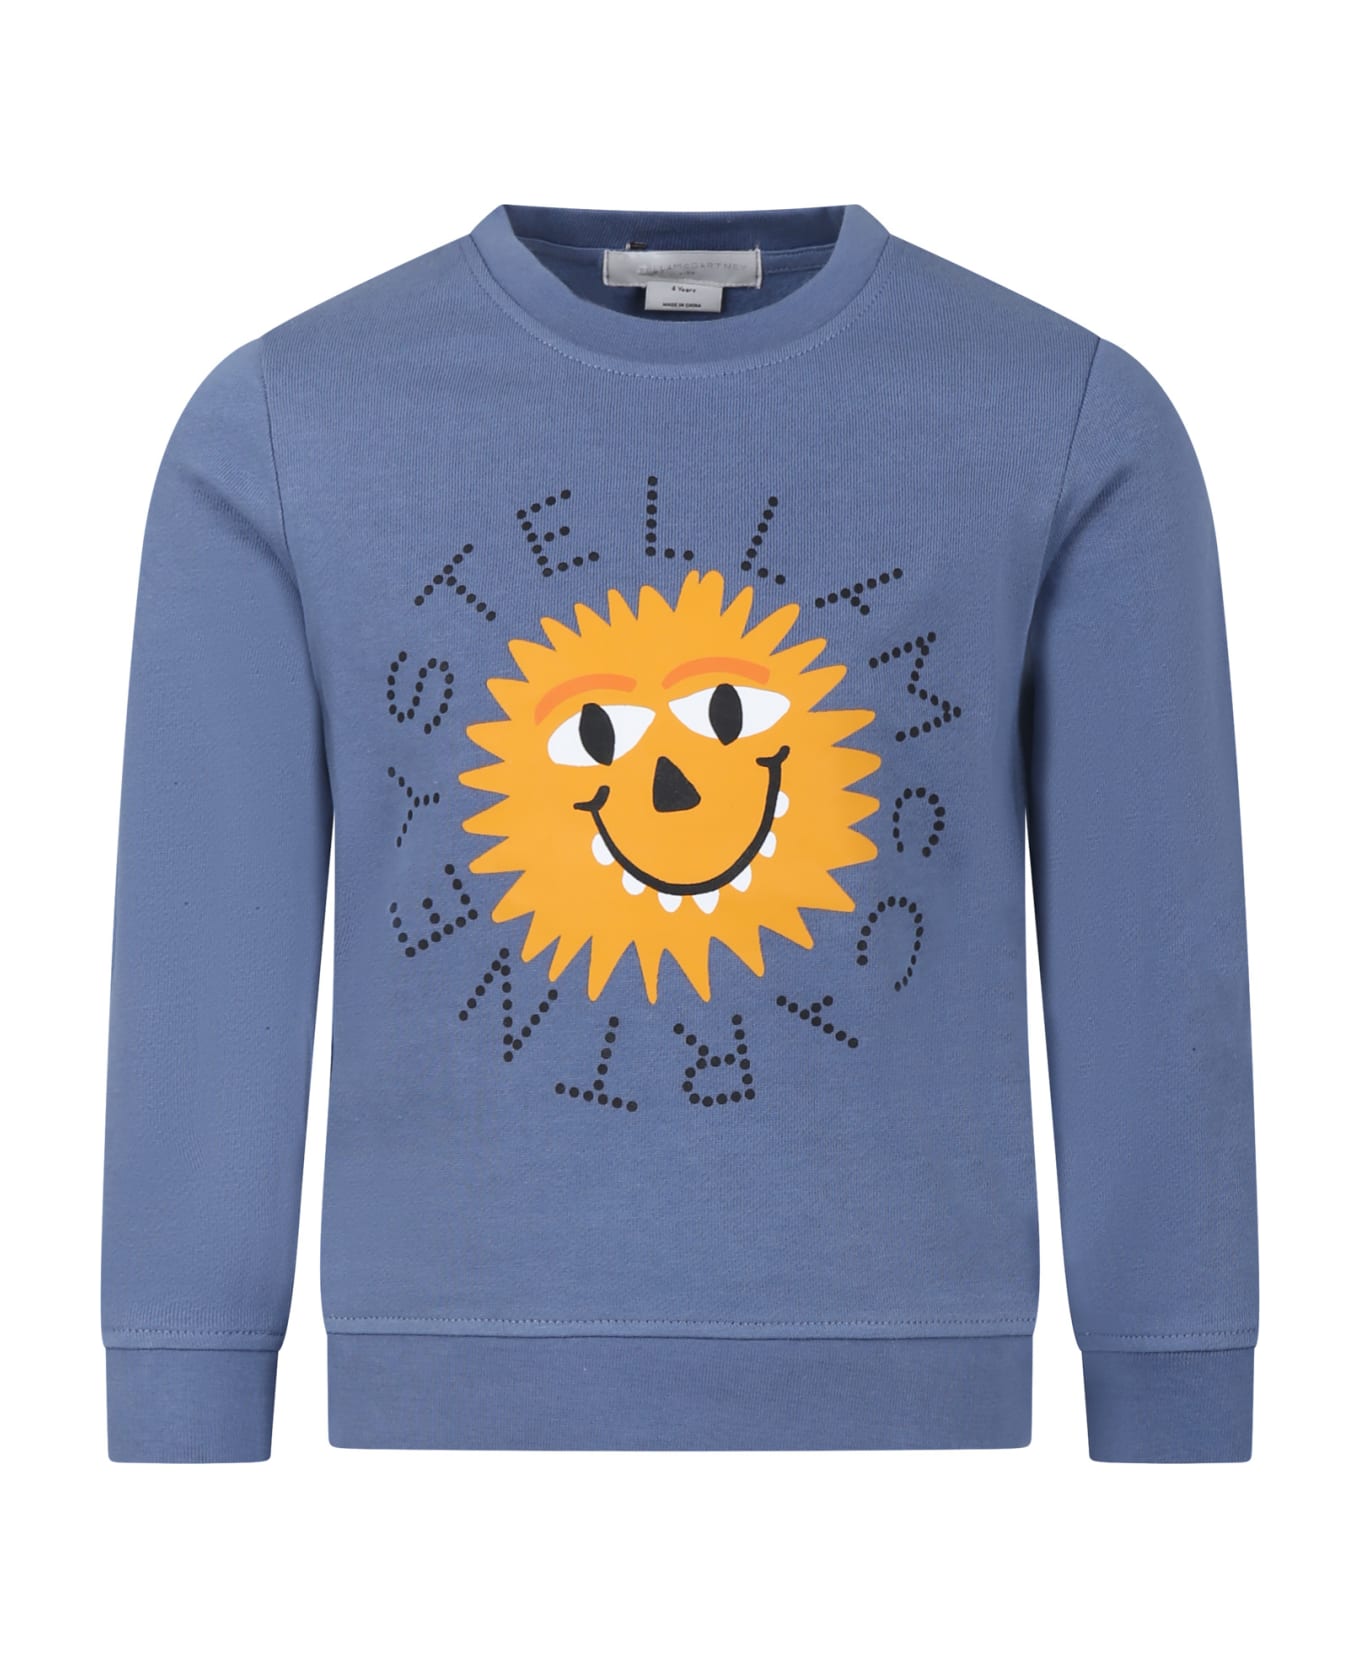 Stella McCartney Kids Blue Sweatshirt For Boy With Print And Logo - Blue